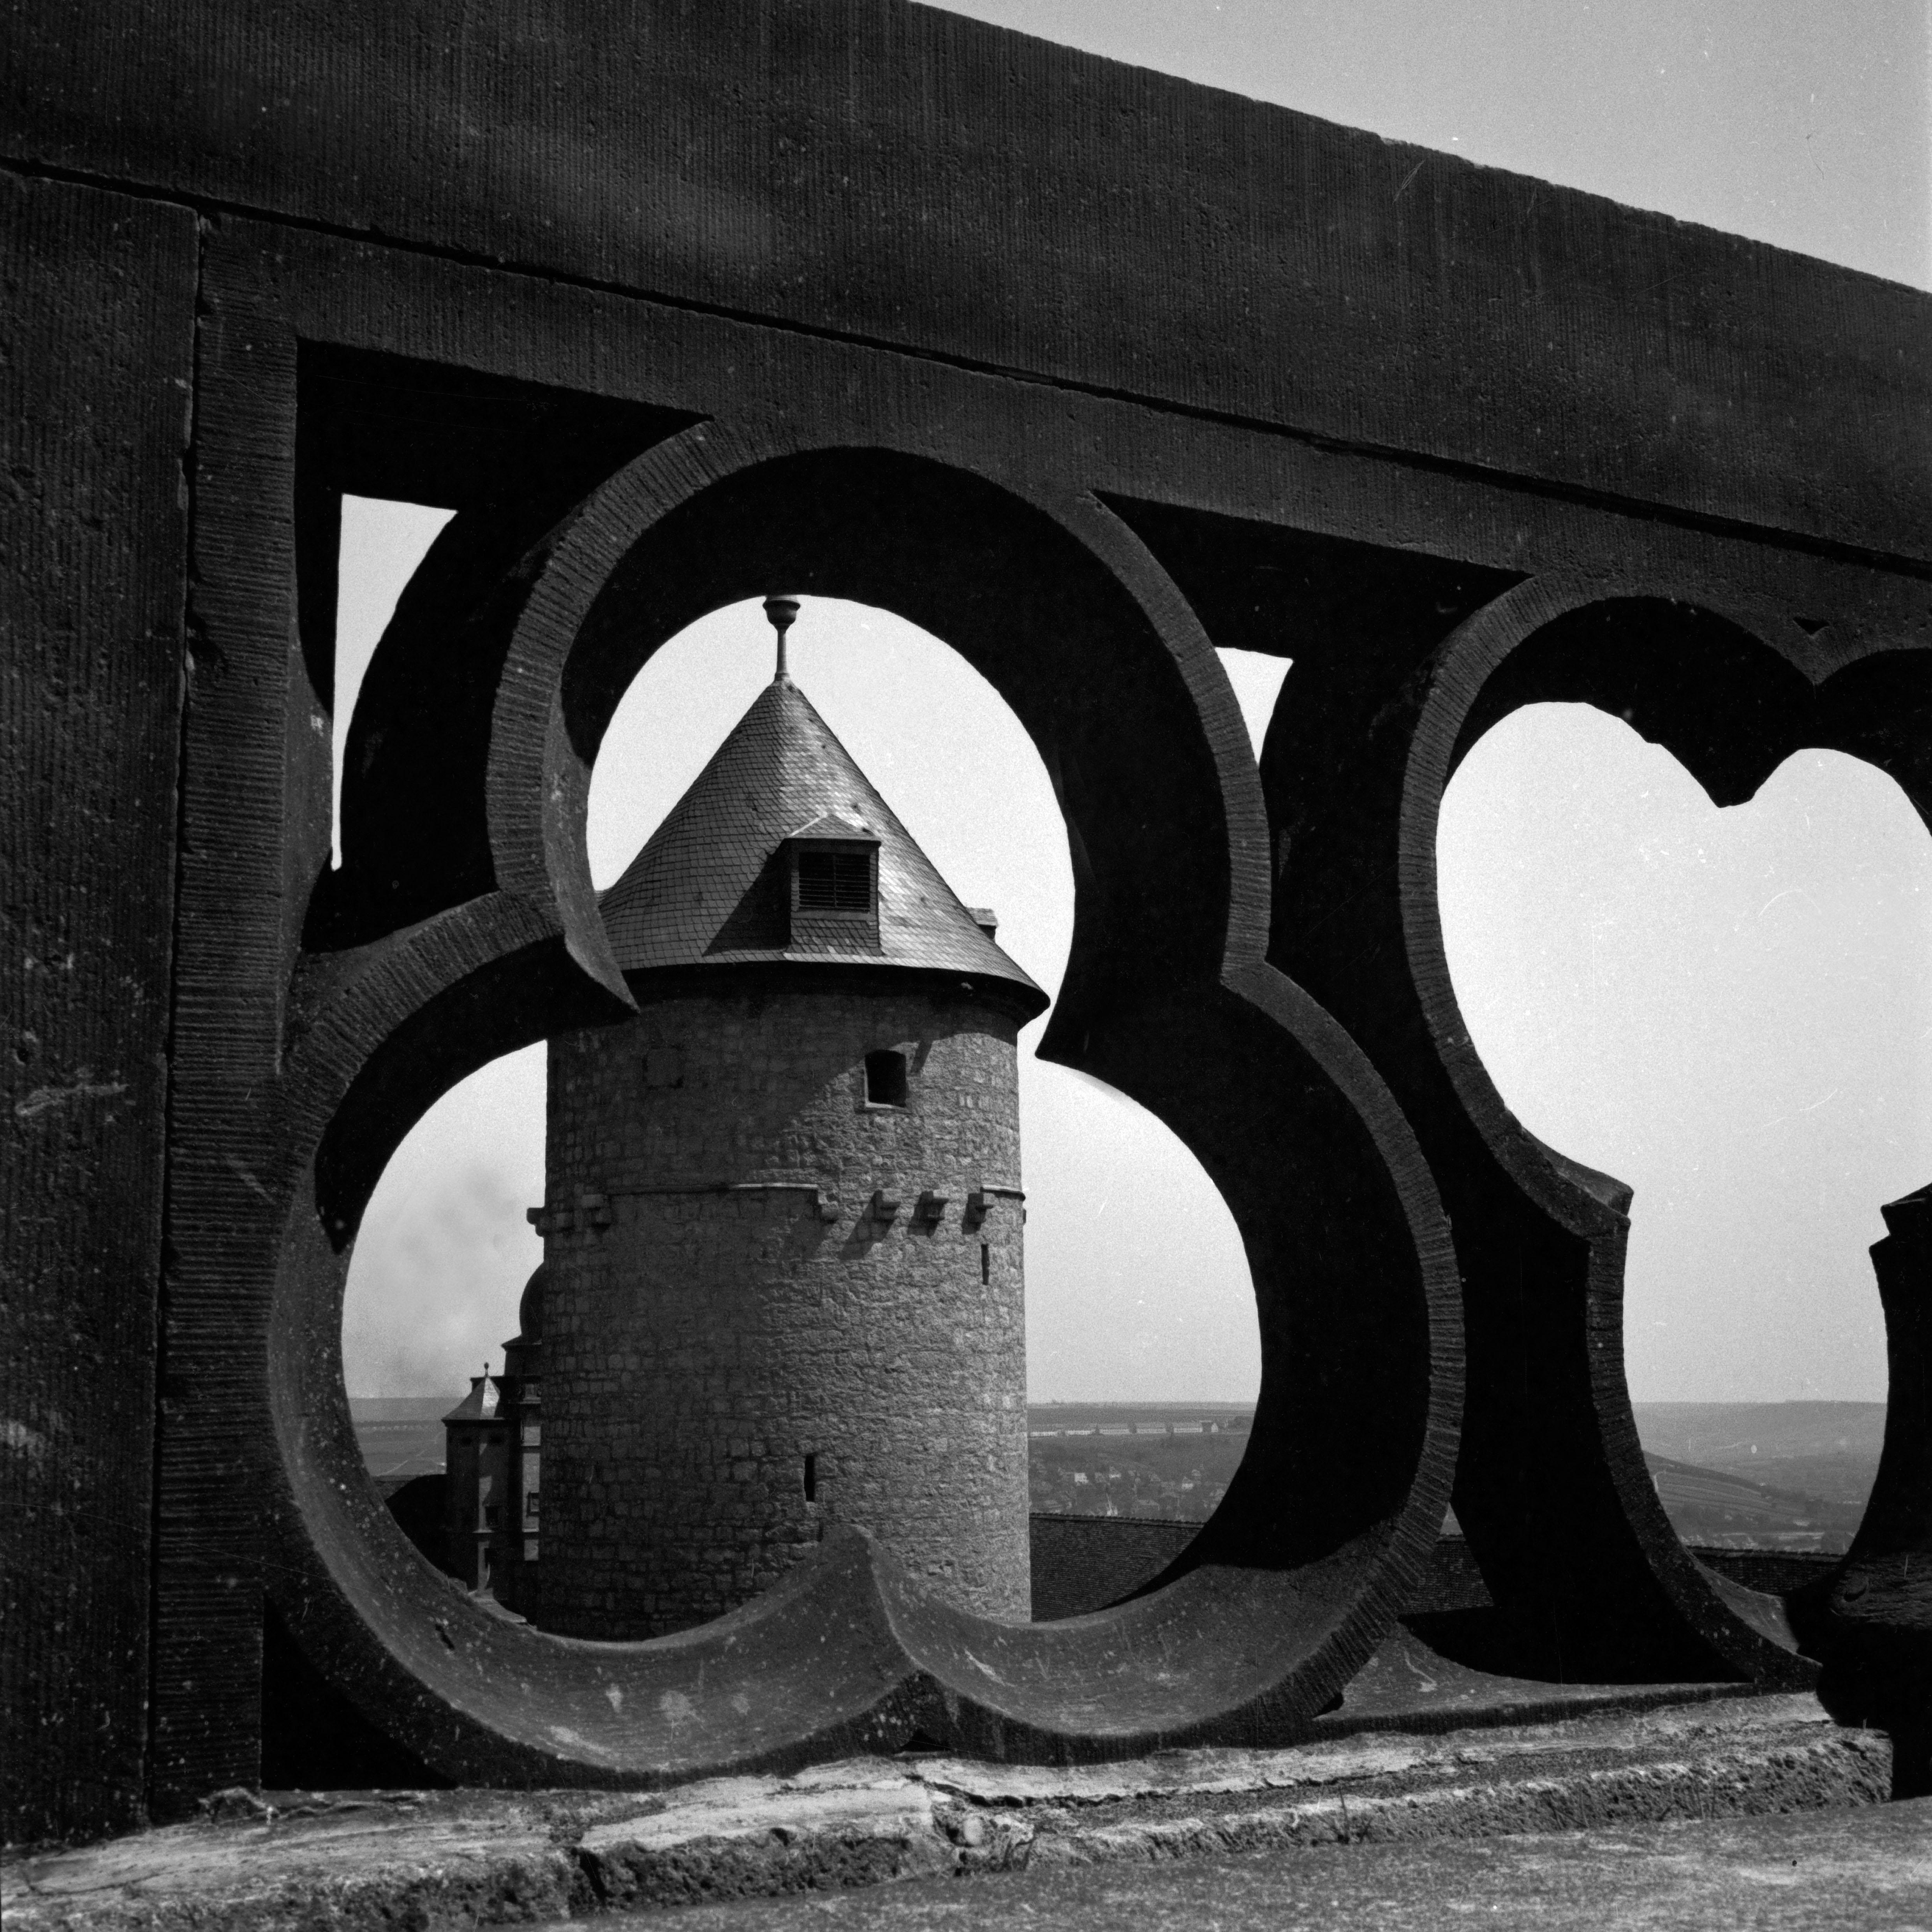 Black and White Photograph Karl Heinrich Lämmel - Wrzburg, Allemagne 1935, Imprimé ultérieurement